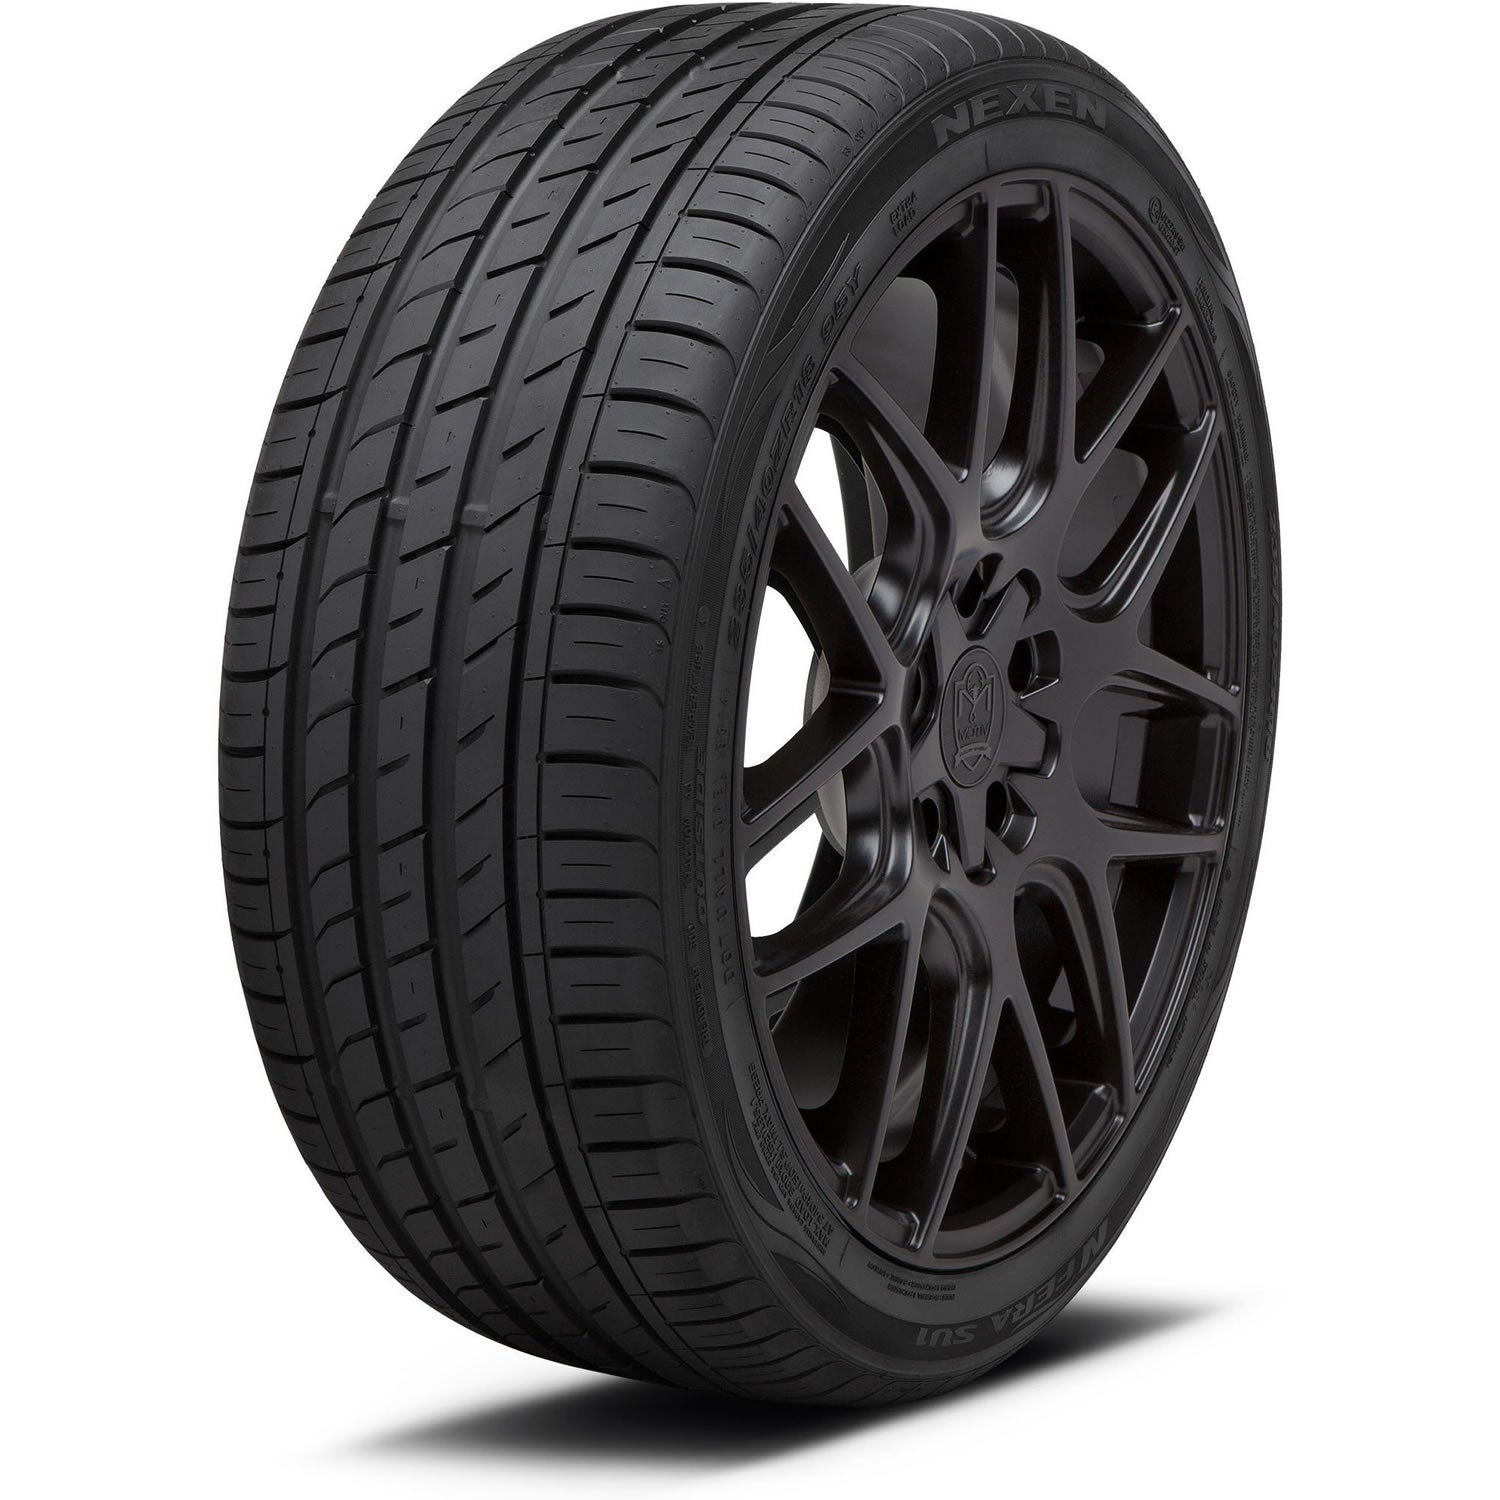 Nexen NFera SU1 275/30R24 (30.6x10.9R 24) Tires